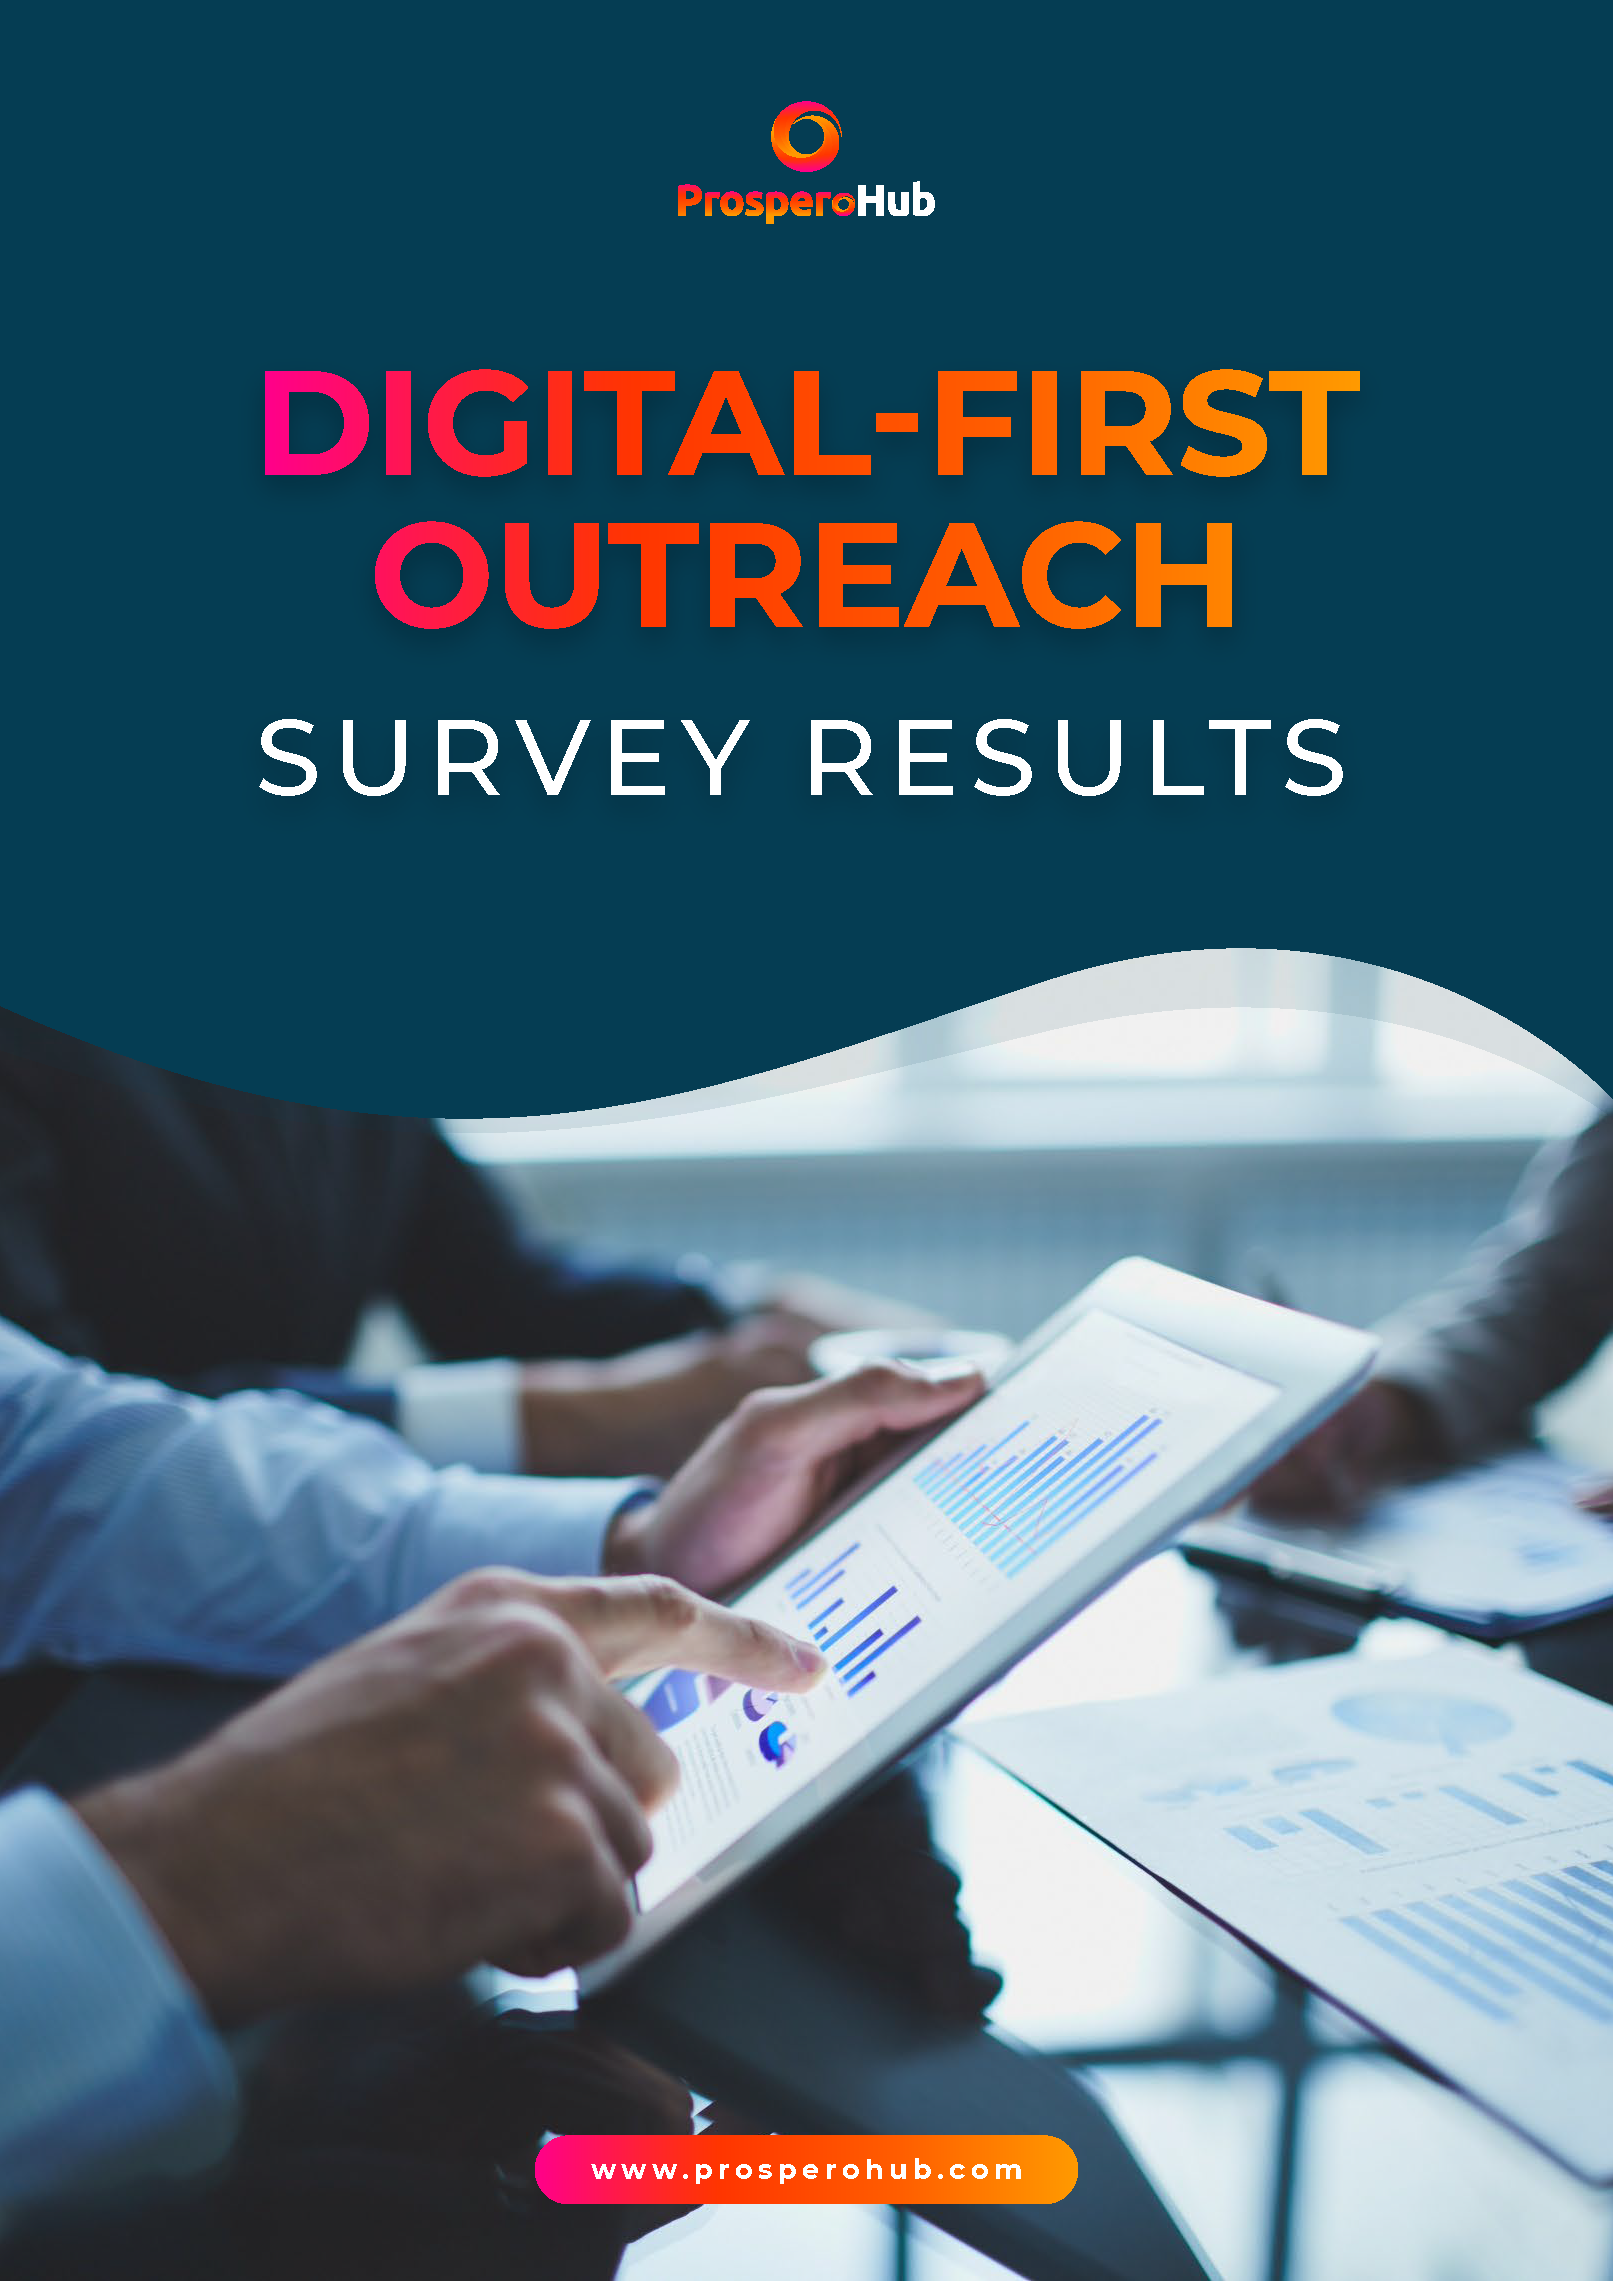 ProsperoHub - Digital-first outreach survey results_Page_1